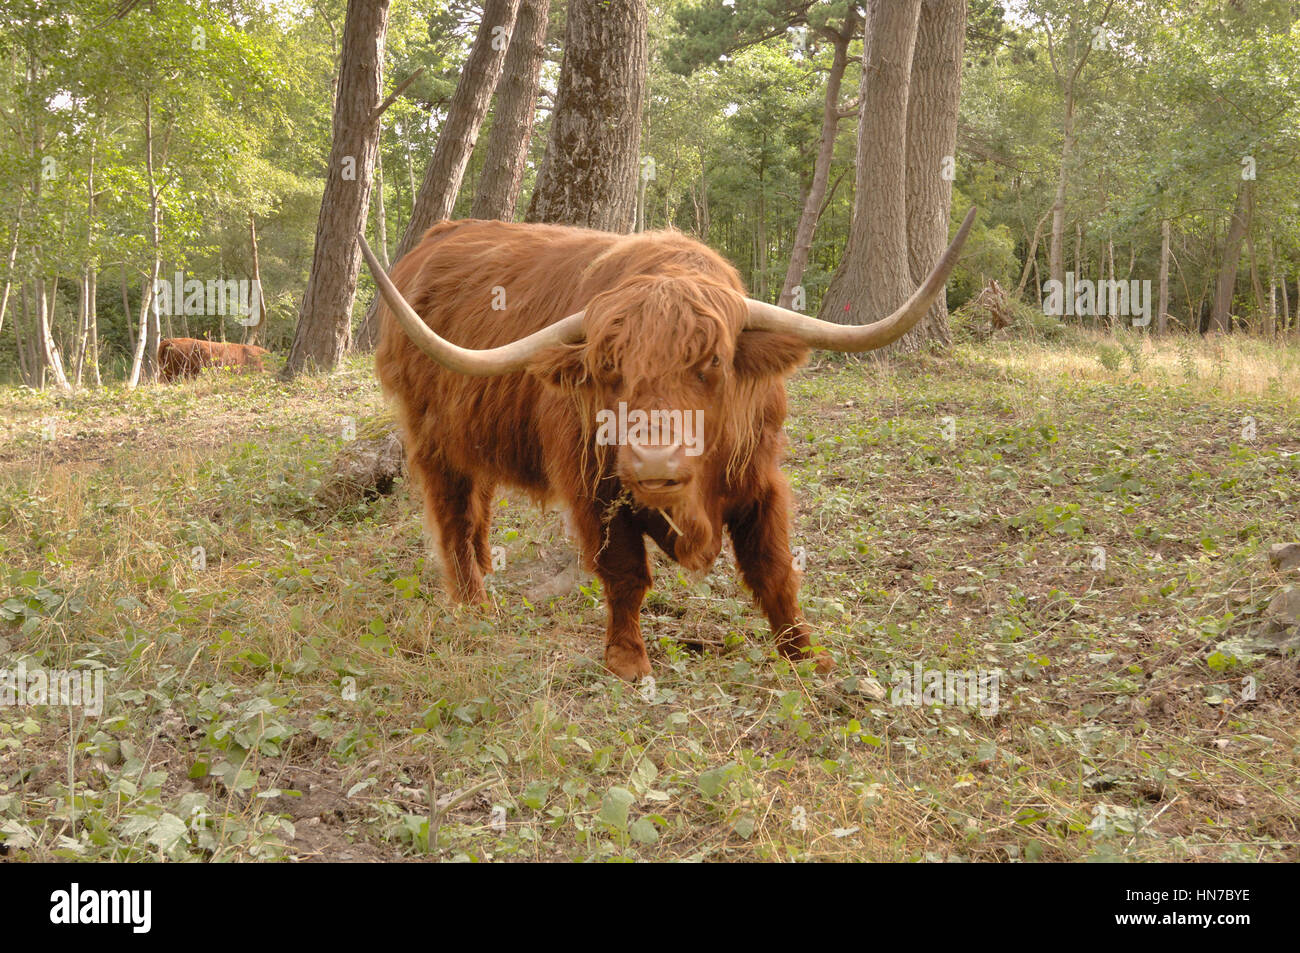 HIghland bovini Bos taurus fotografato nella riserva naturale, Francia Foto Stock